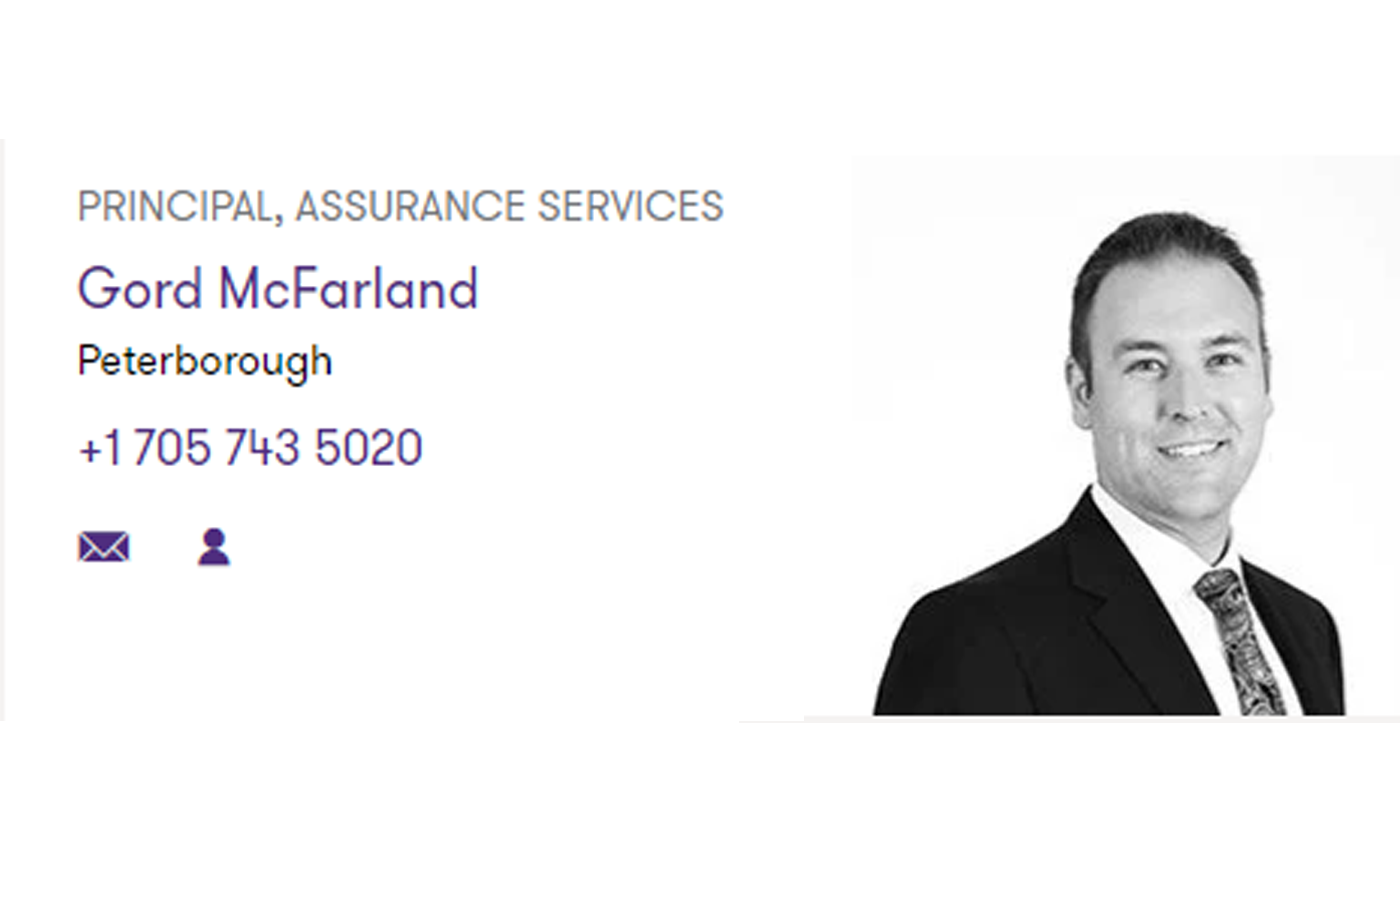 Gord McFarland, Principal, Assurance Services, Peterborough, 1-705-743-5020